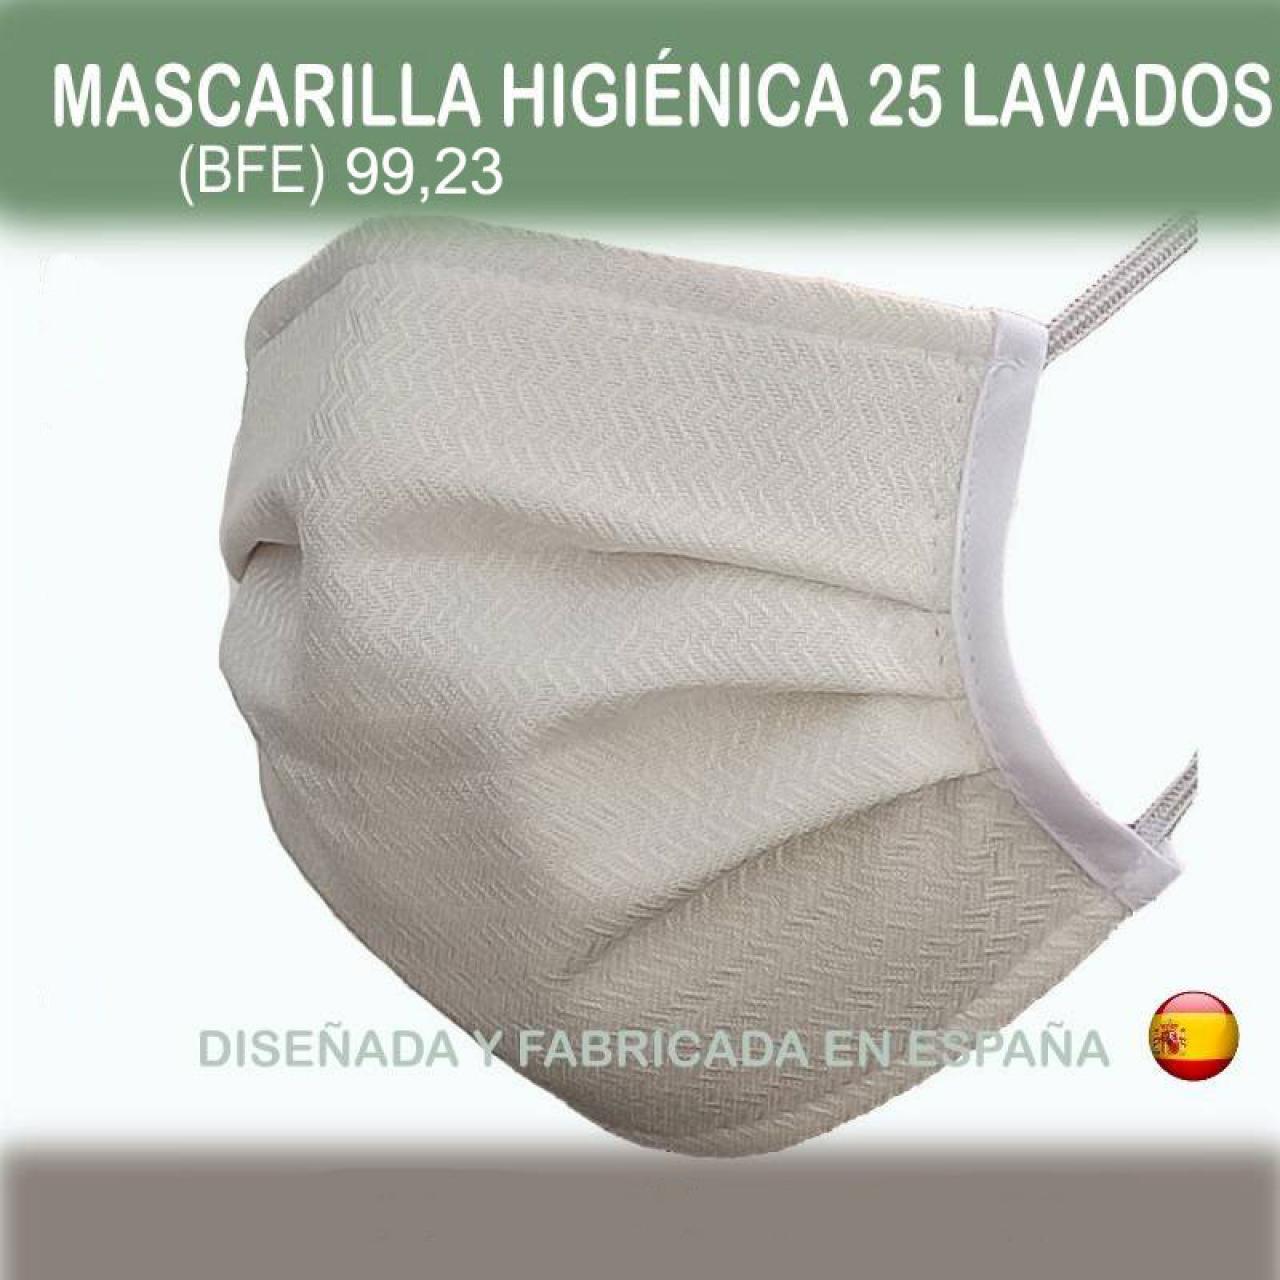 Mascarilla higiénica reutilizable certificada por Aitex para 25 lavados